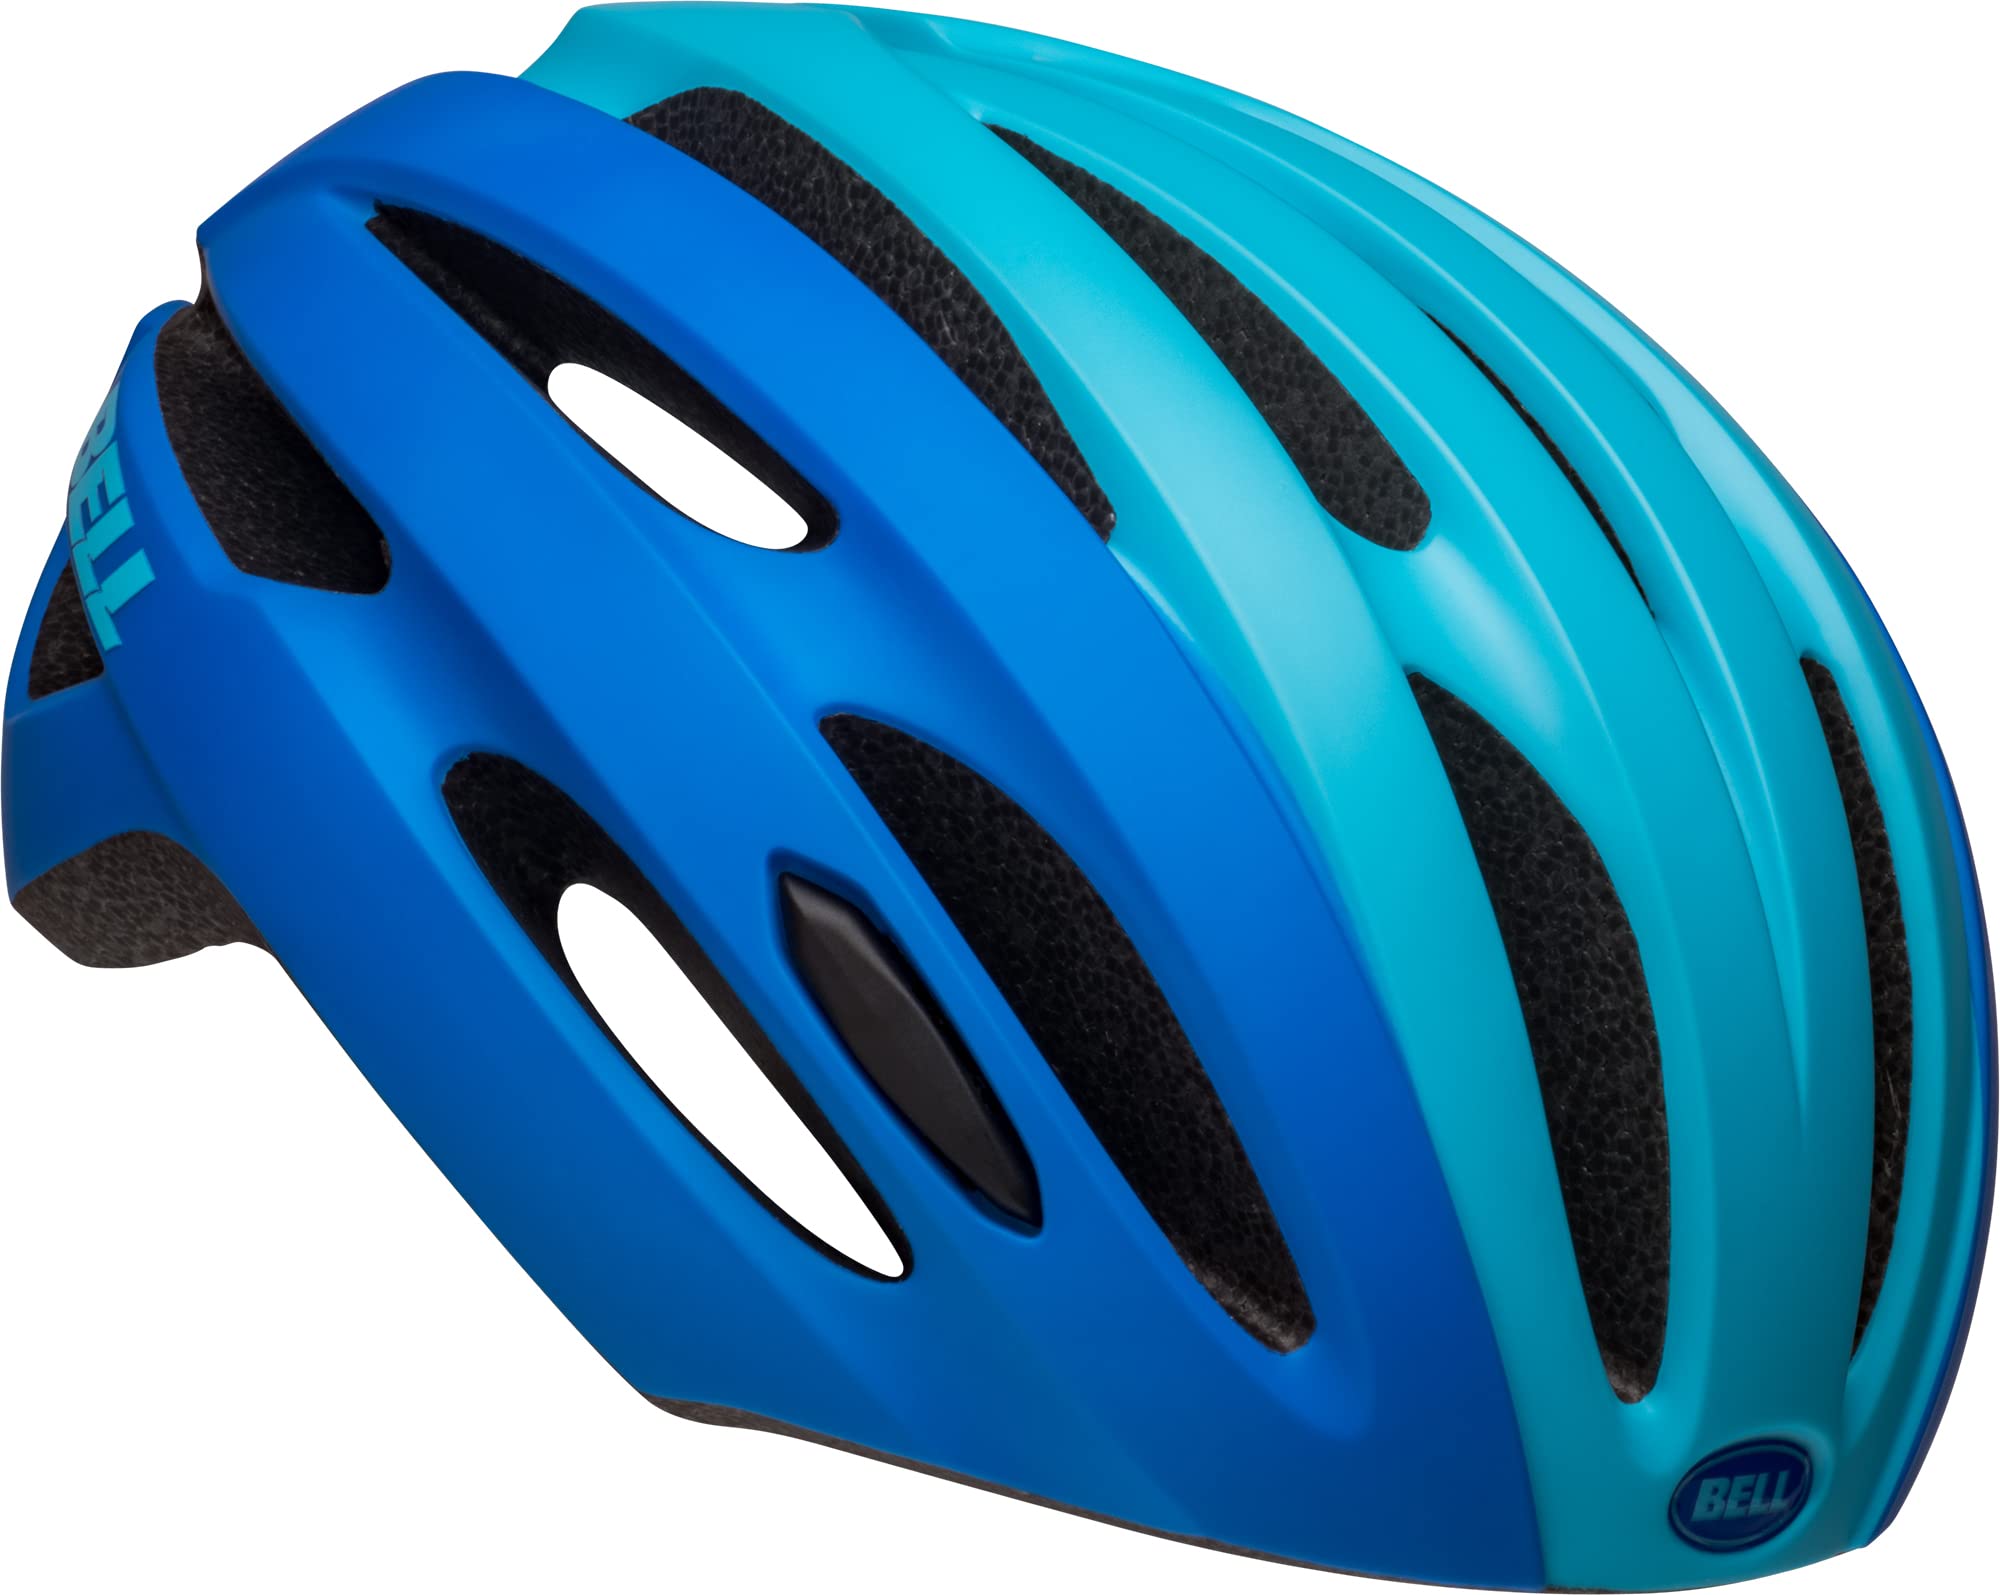 BELL Avenue MIPS Adult Road Bike Helmet  - Like New